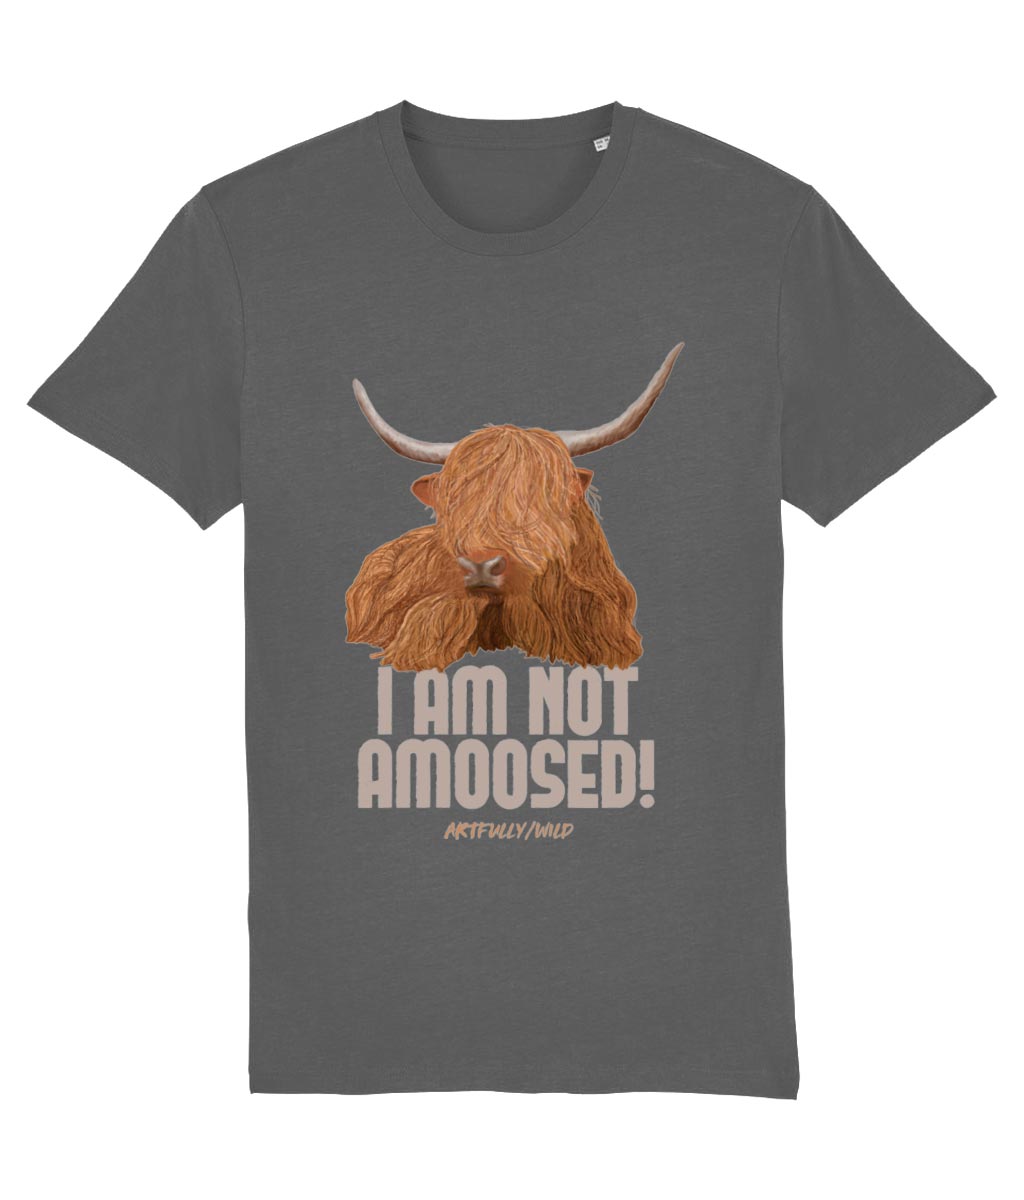 'I AM NOT AMOOSED' Print on Dark Grey Sustainable T-Shirt. Unisex/Women/Men. Certified Organic Clothing. Original Highland Cow Illustration by Artfully/Wild.